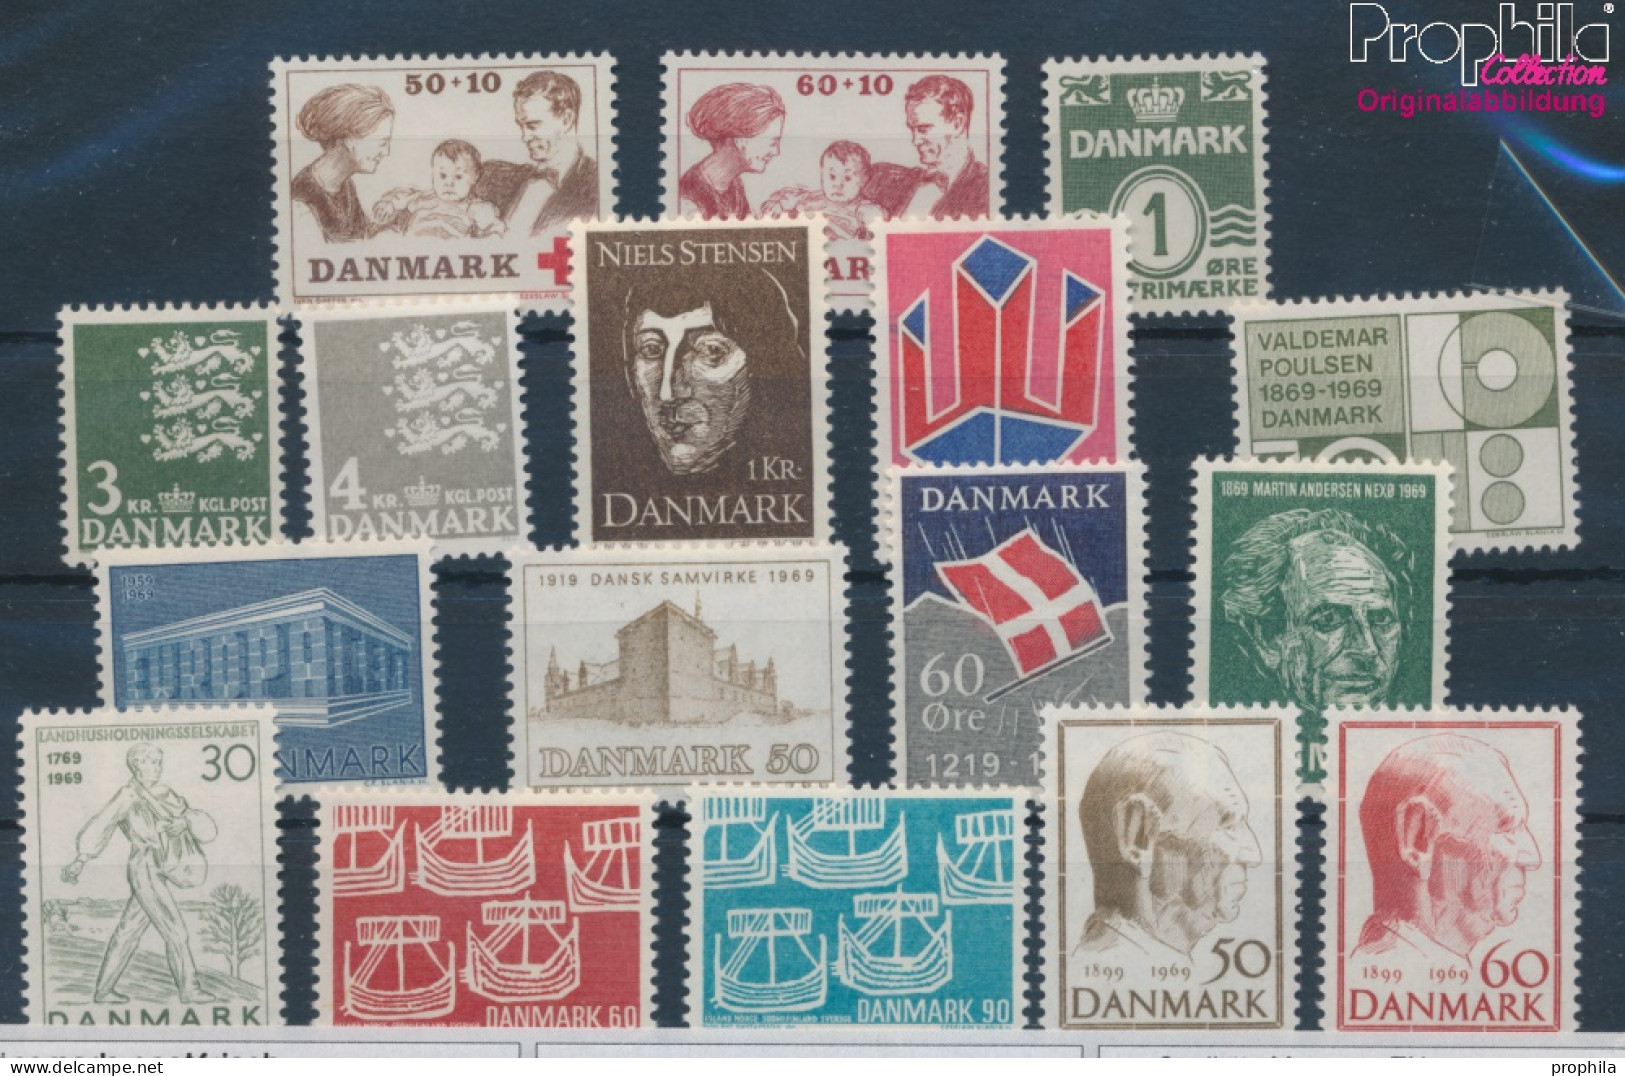 Dänemark Postfrisch Landhaushaltsdgesellschaft 1969 Europa, Kunst, Rotes Kreuz U.a.  (10326022 - Ongebruikt